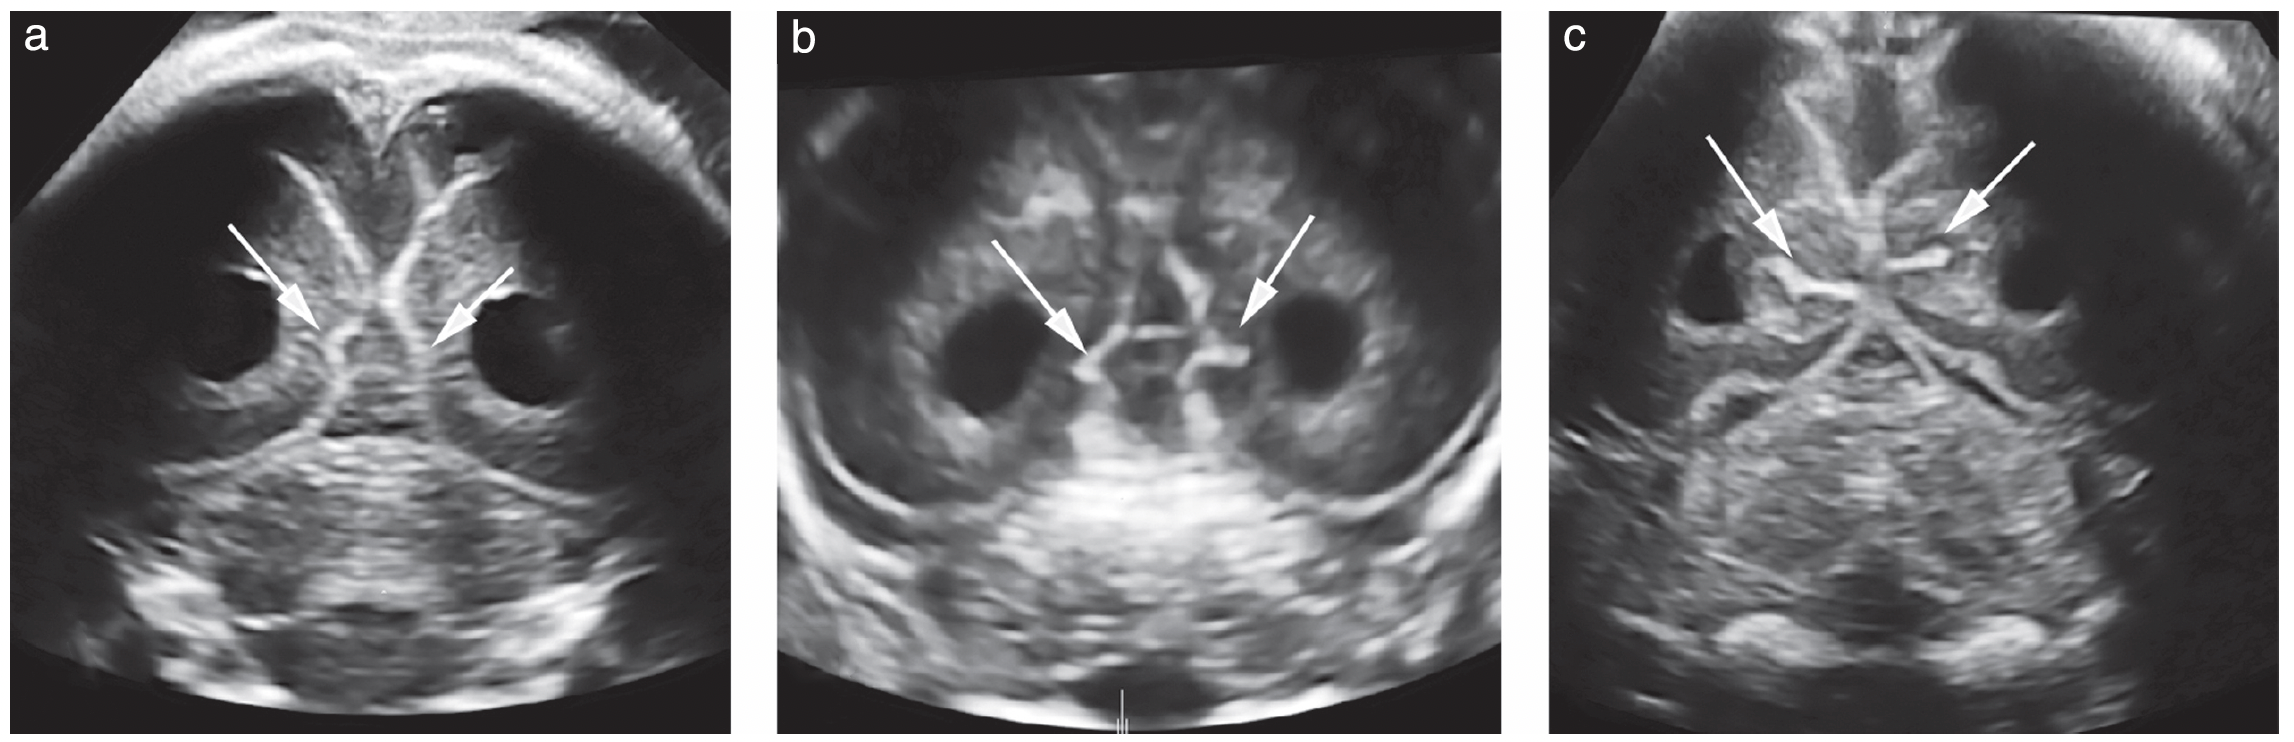 On transcerebellar view of fetal head